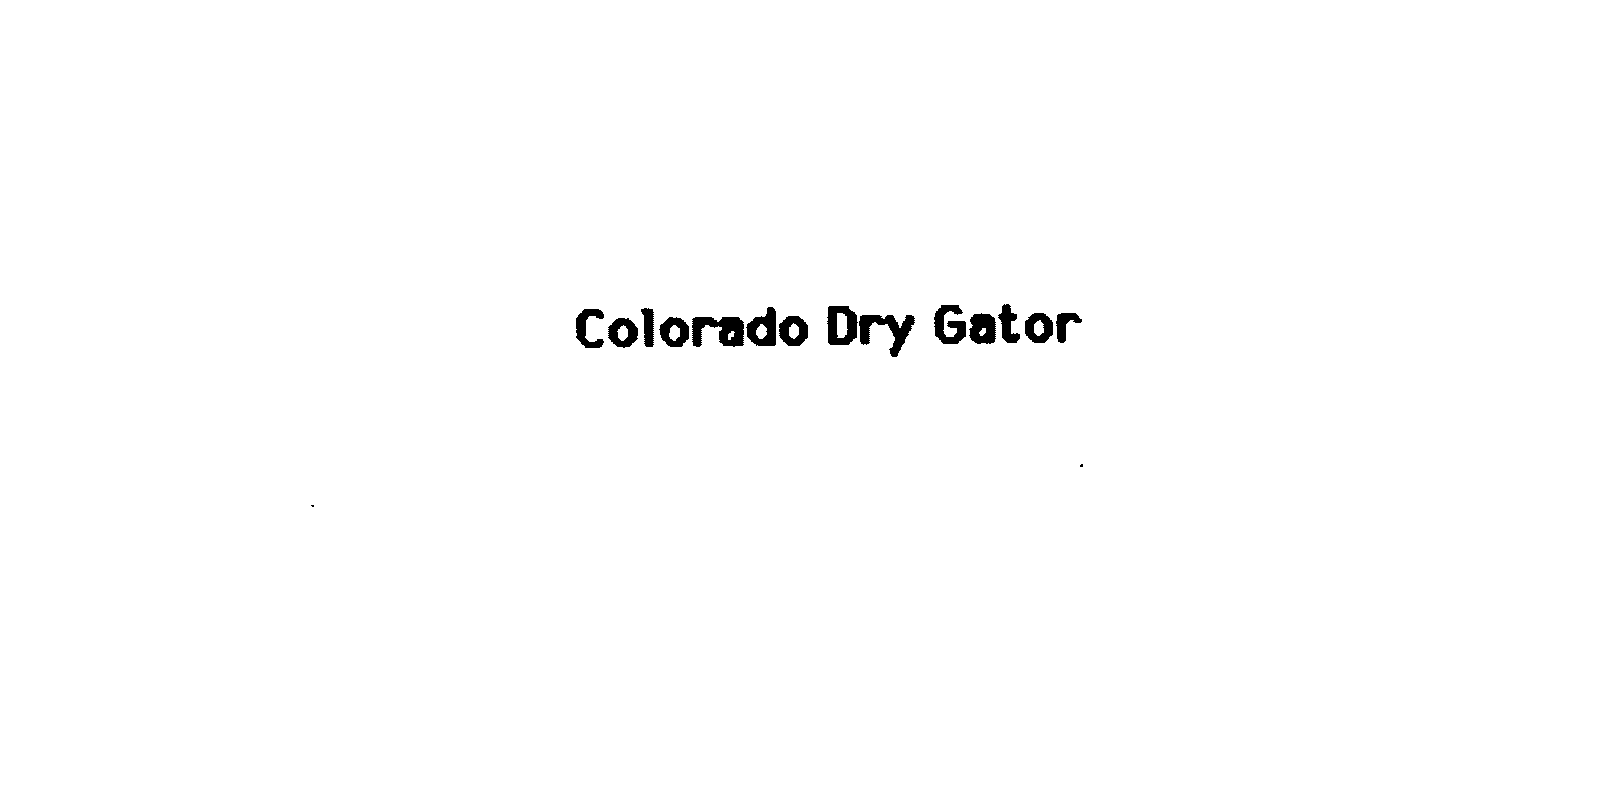  COLORADO DRY GATOR